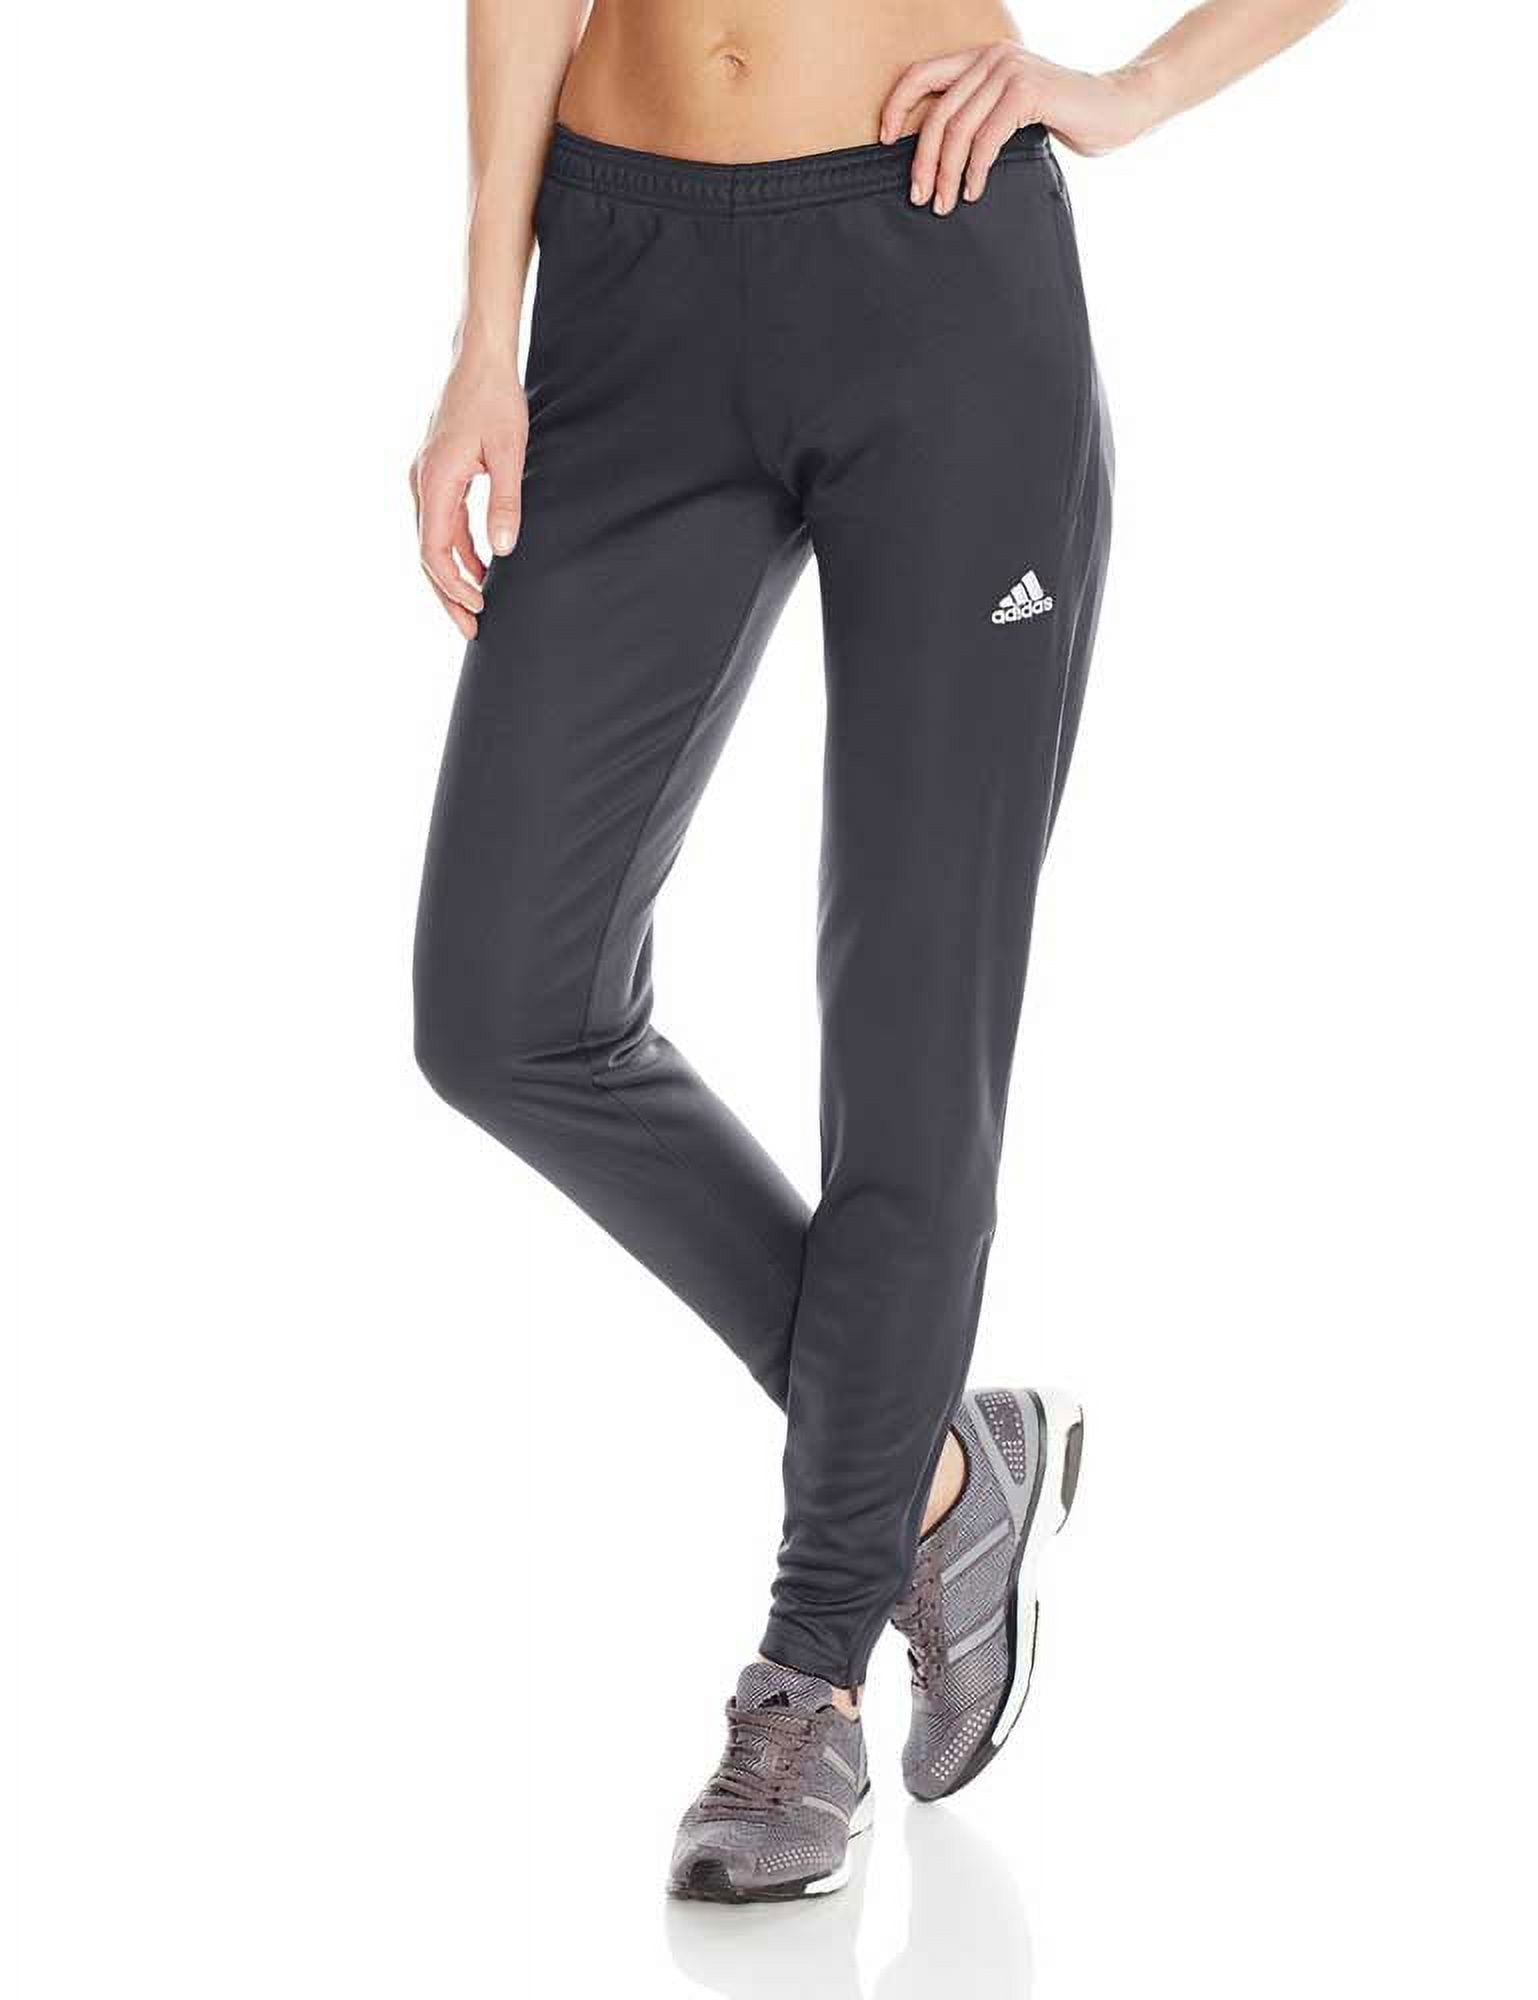 Adidas Women Core Training Pants Dark Grey/White Size US X-Small 